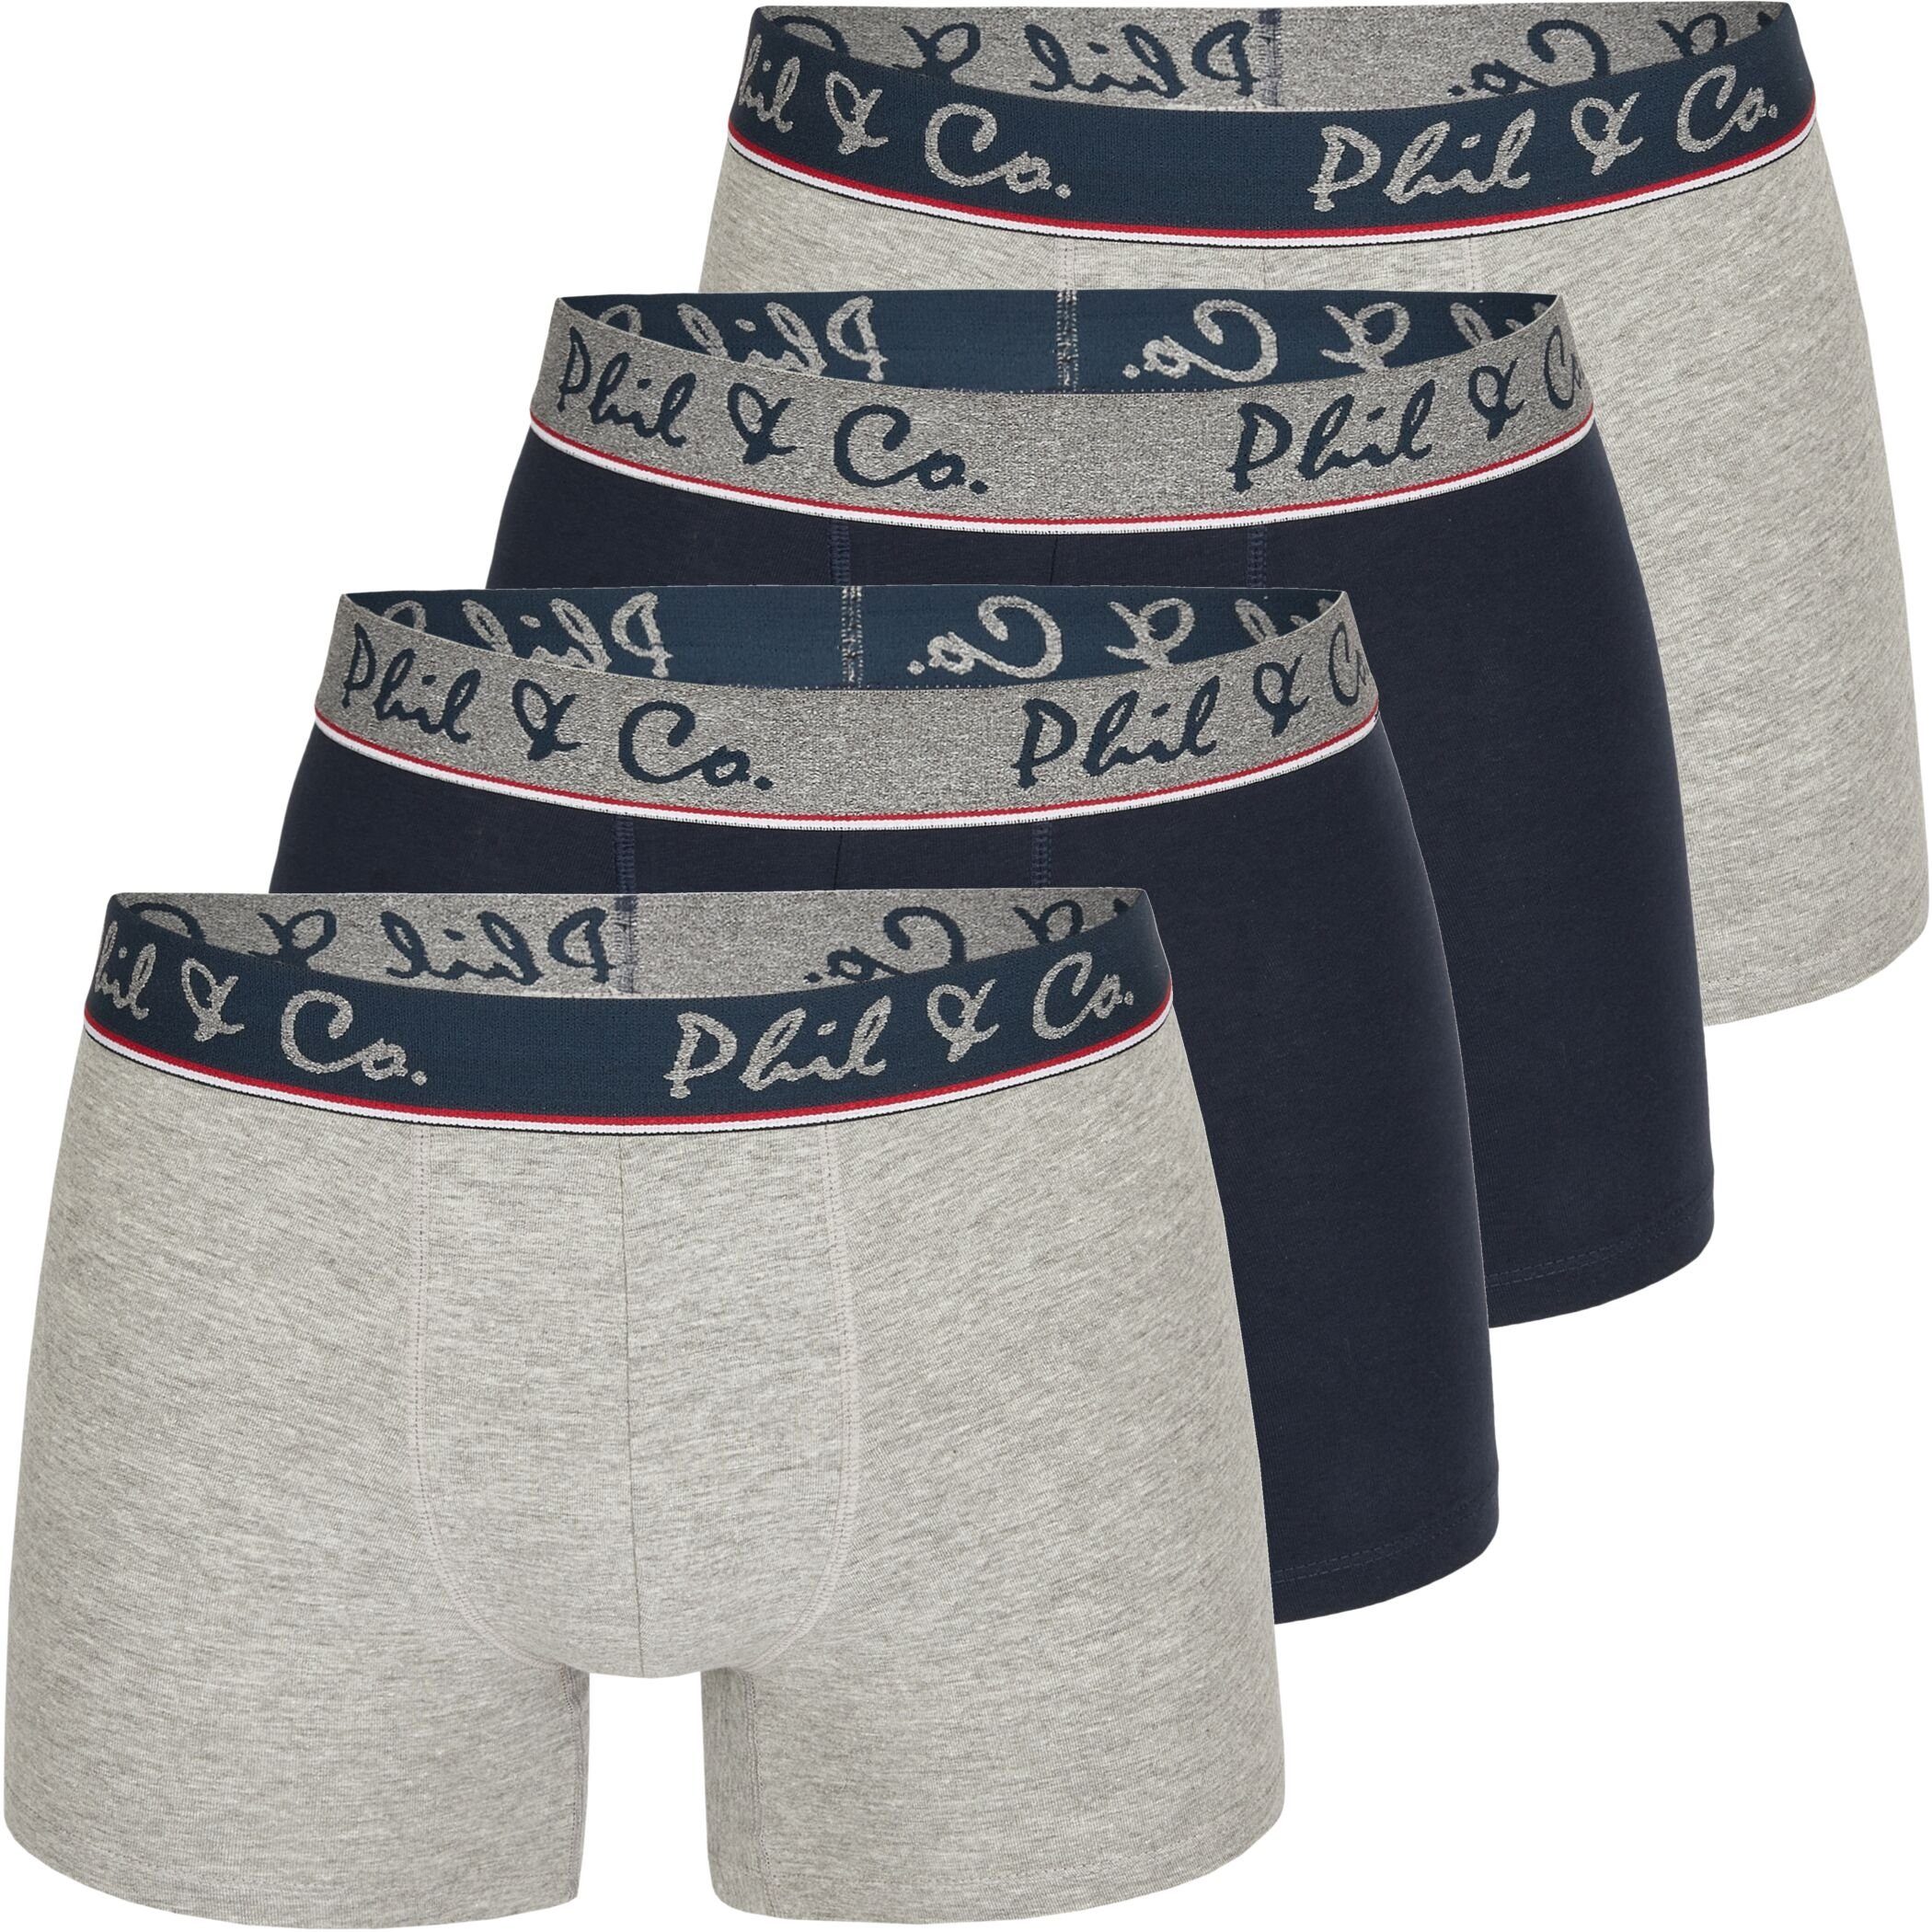 Phil & Co. Boxershorts 4er Pack Phil & Co Berlin Jersey Boxershorts Trunk Short Pant FARBWAHL (1-St) DESIGN 07